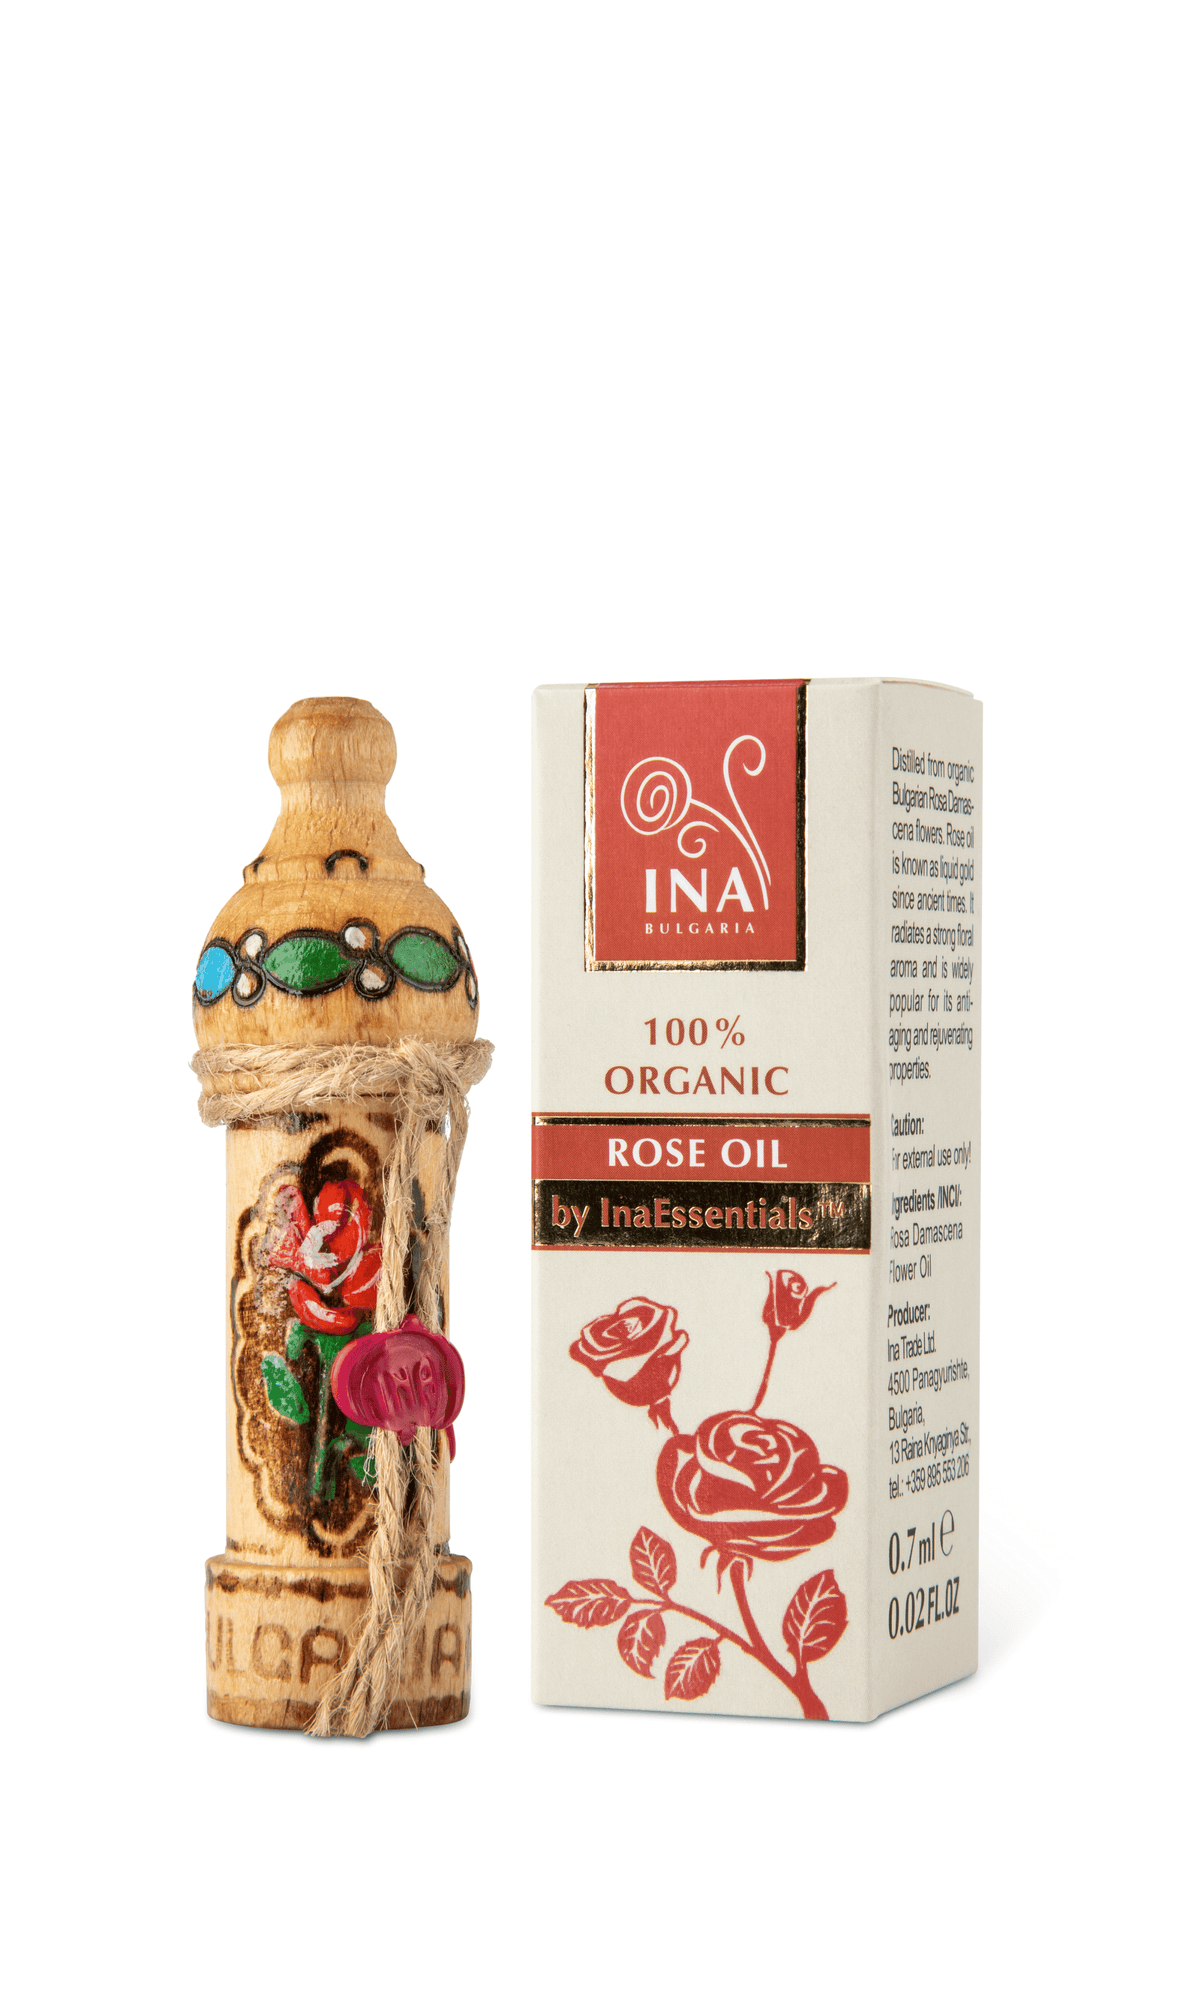 Organic Essential Oil of Roses - Rosa Damascena Oil